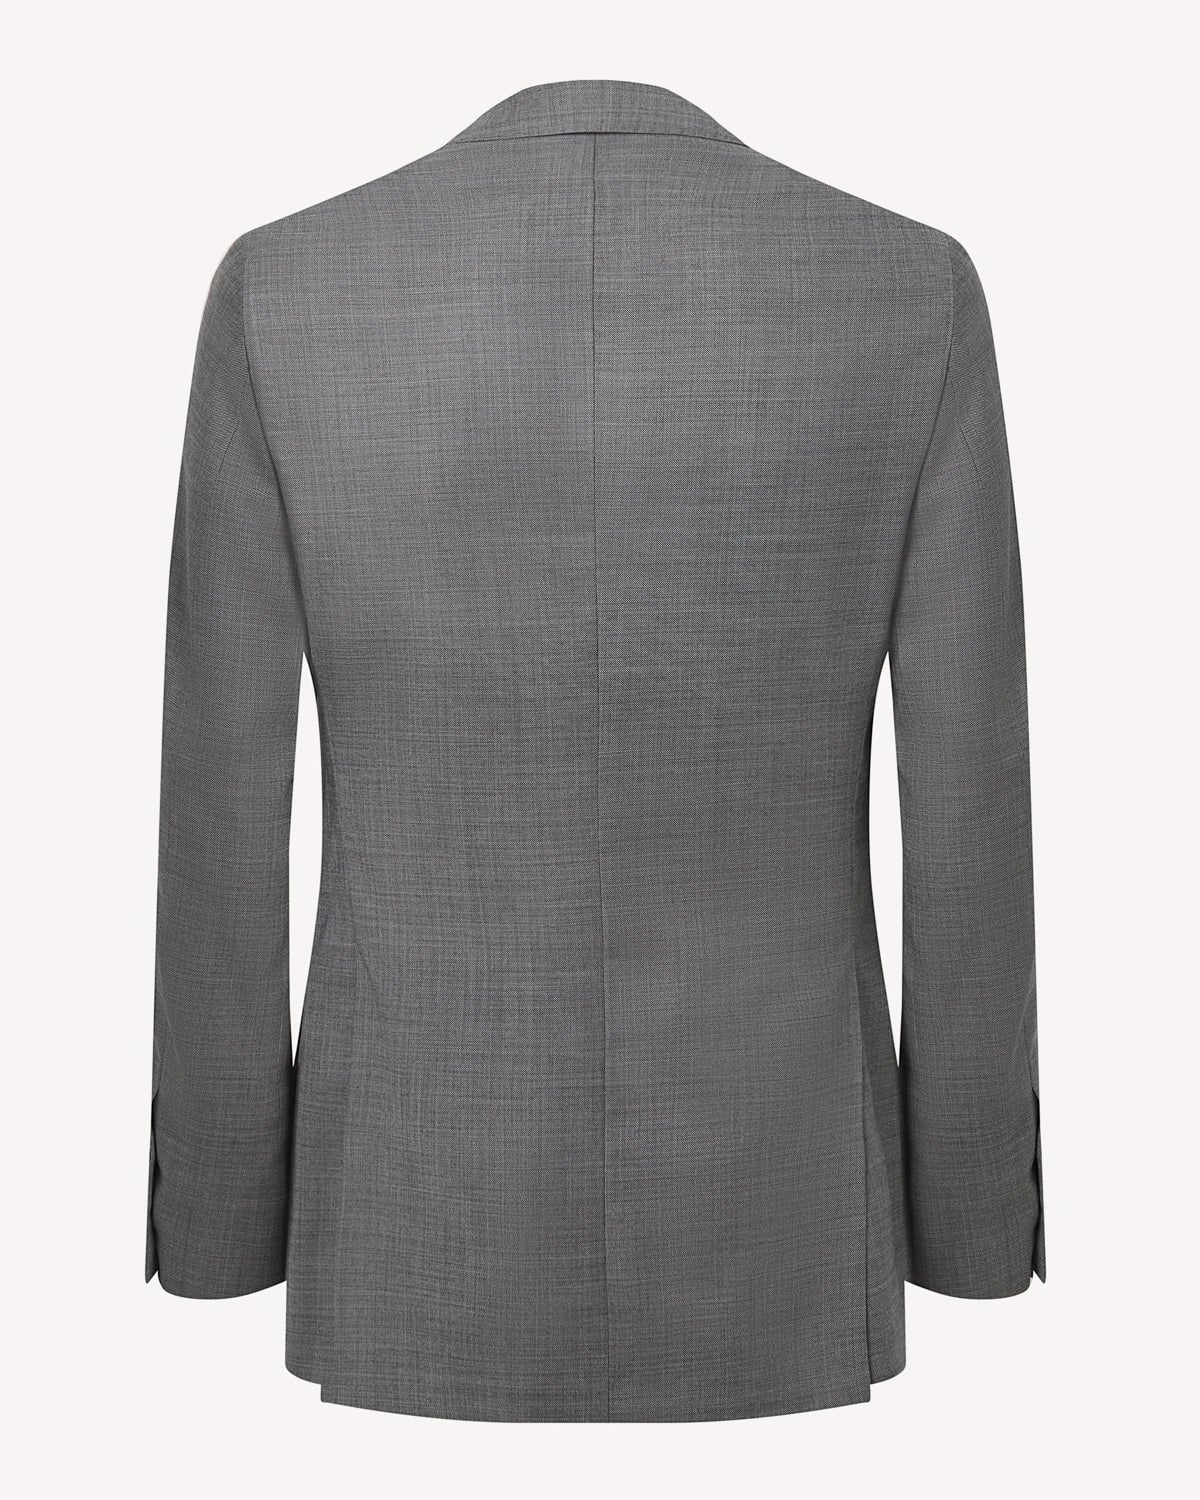 Kilgour Savile Row Tailoring SB1 KG Single Breasted Lt Grey Suit